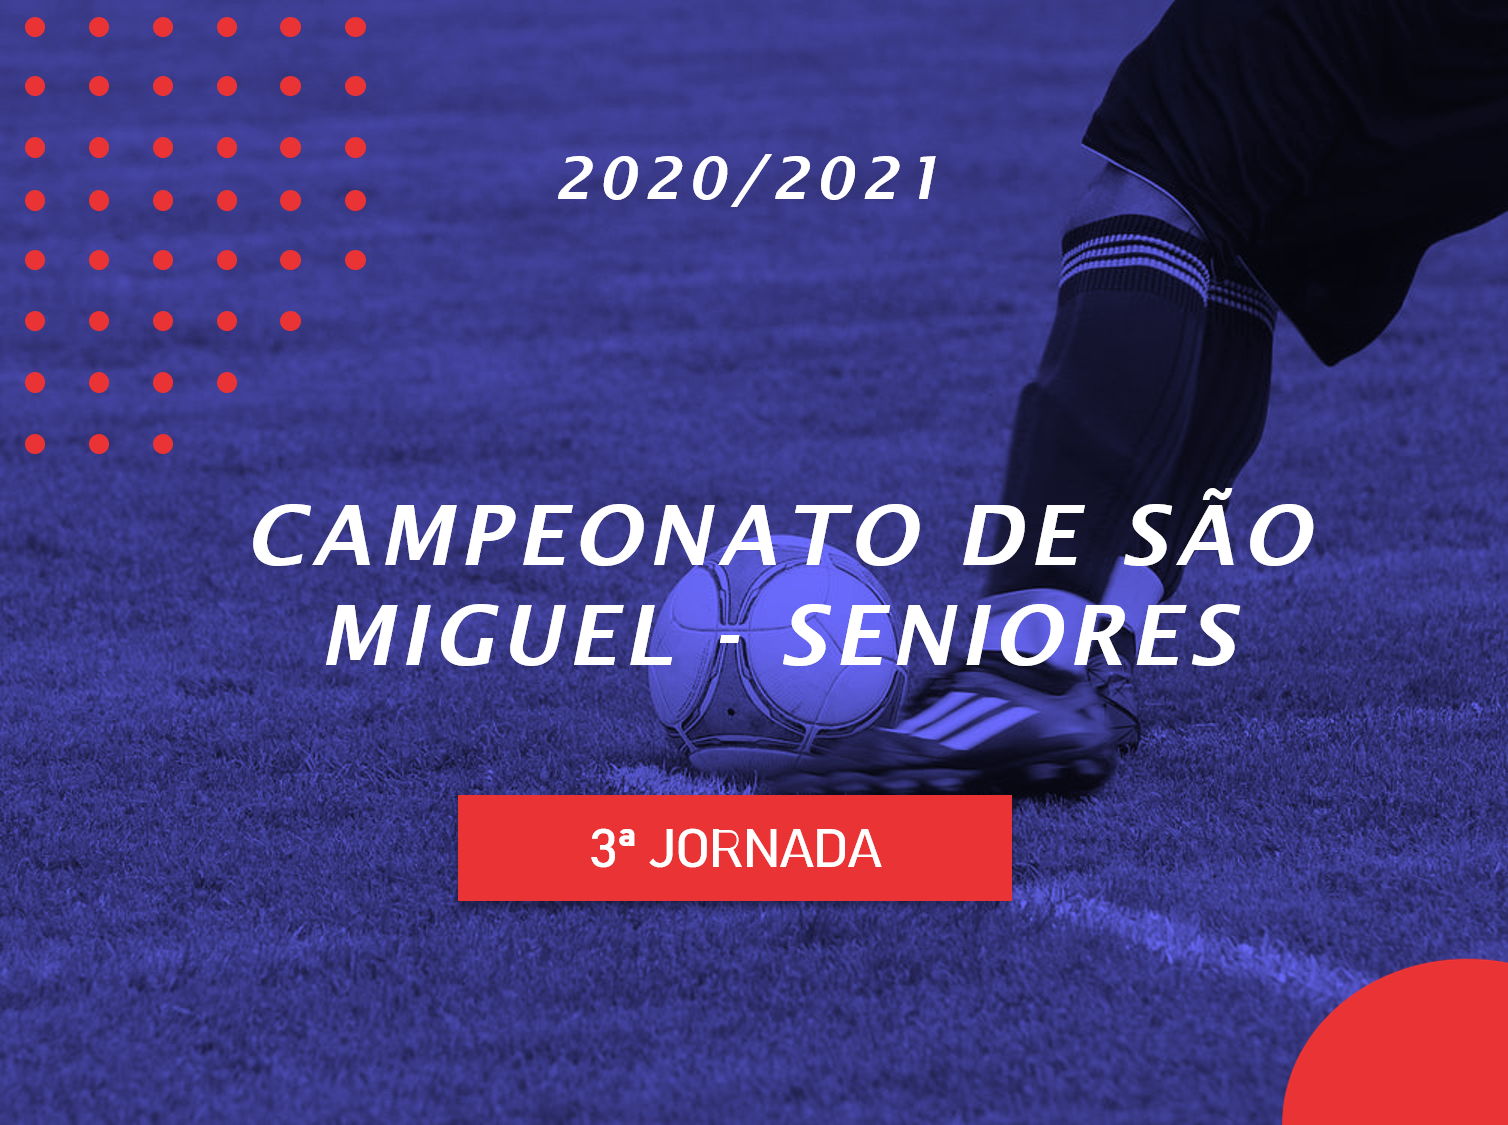 Campeonato de São Miguel - 3ª Jornada - Resultados